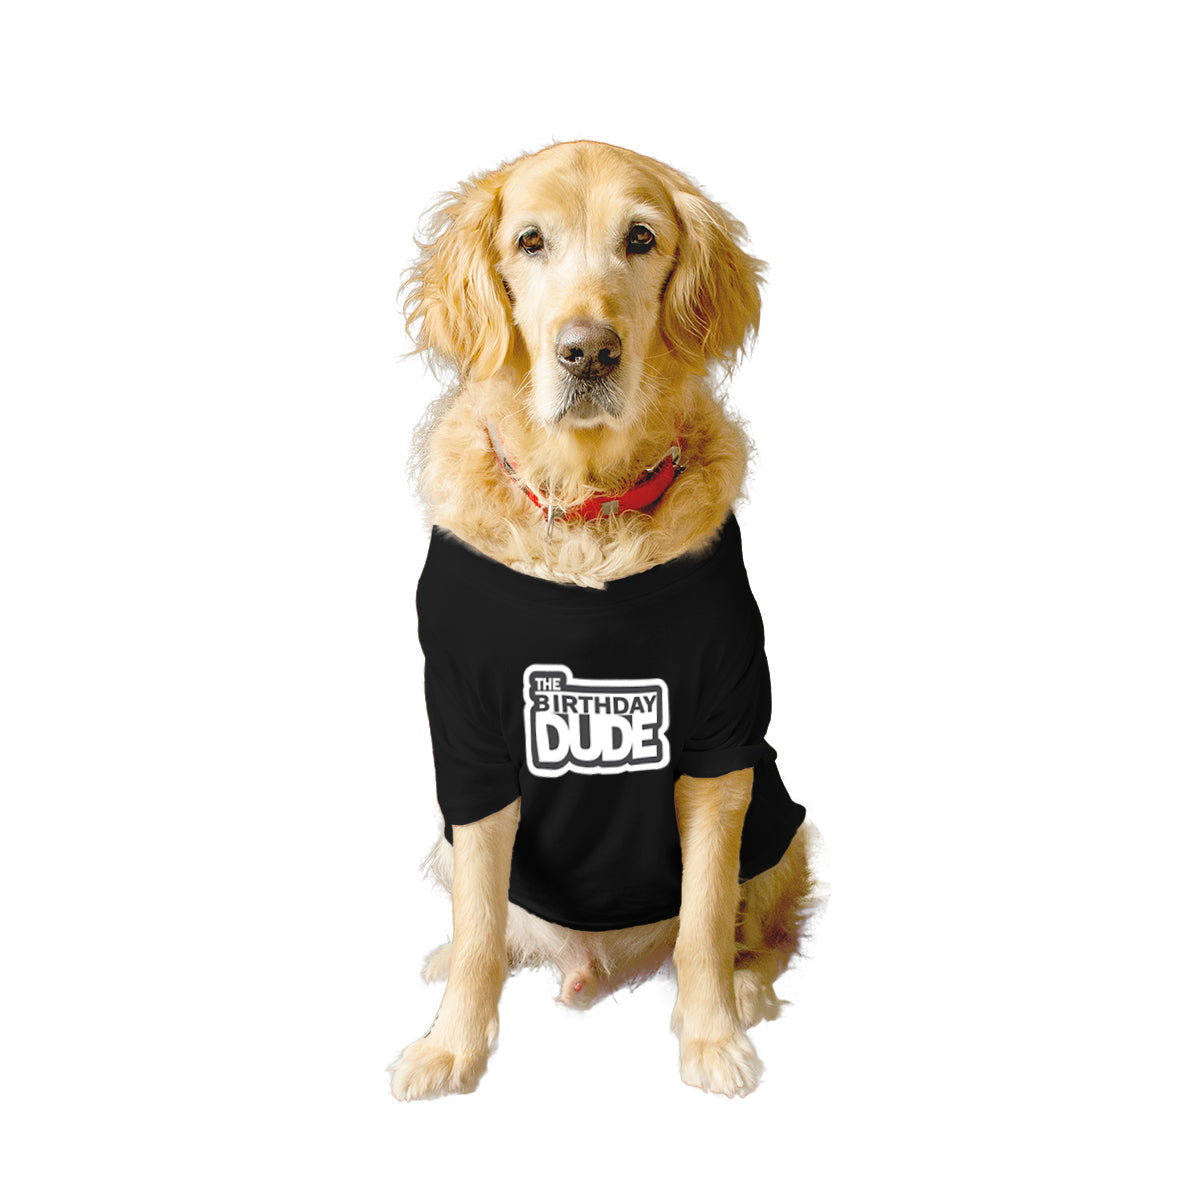 Ruse XX-Small (Chihuahuas, Papillons) / Black Ruse Basic Crew Neck 'The Birthday Dude' Printed Half Sleeves Dog Tee8